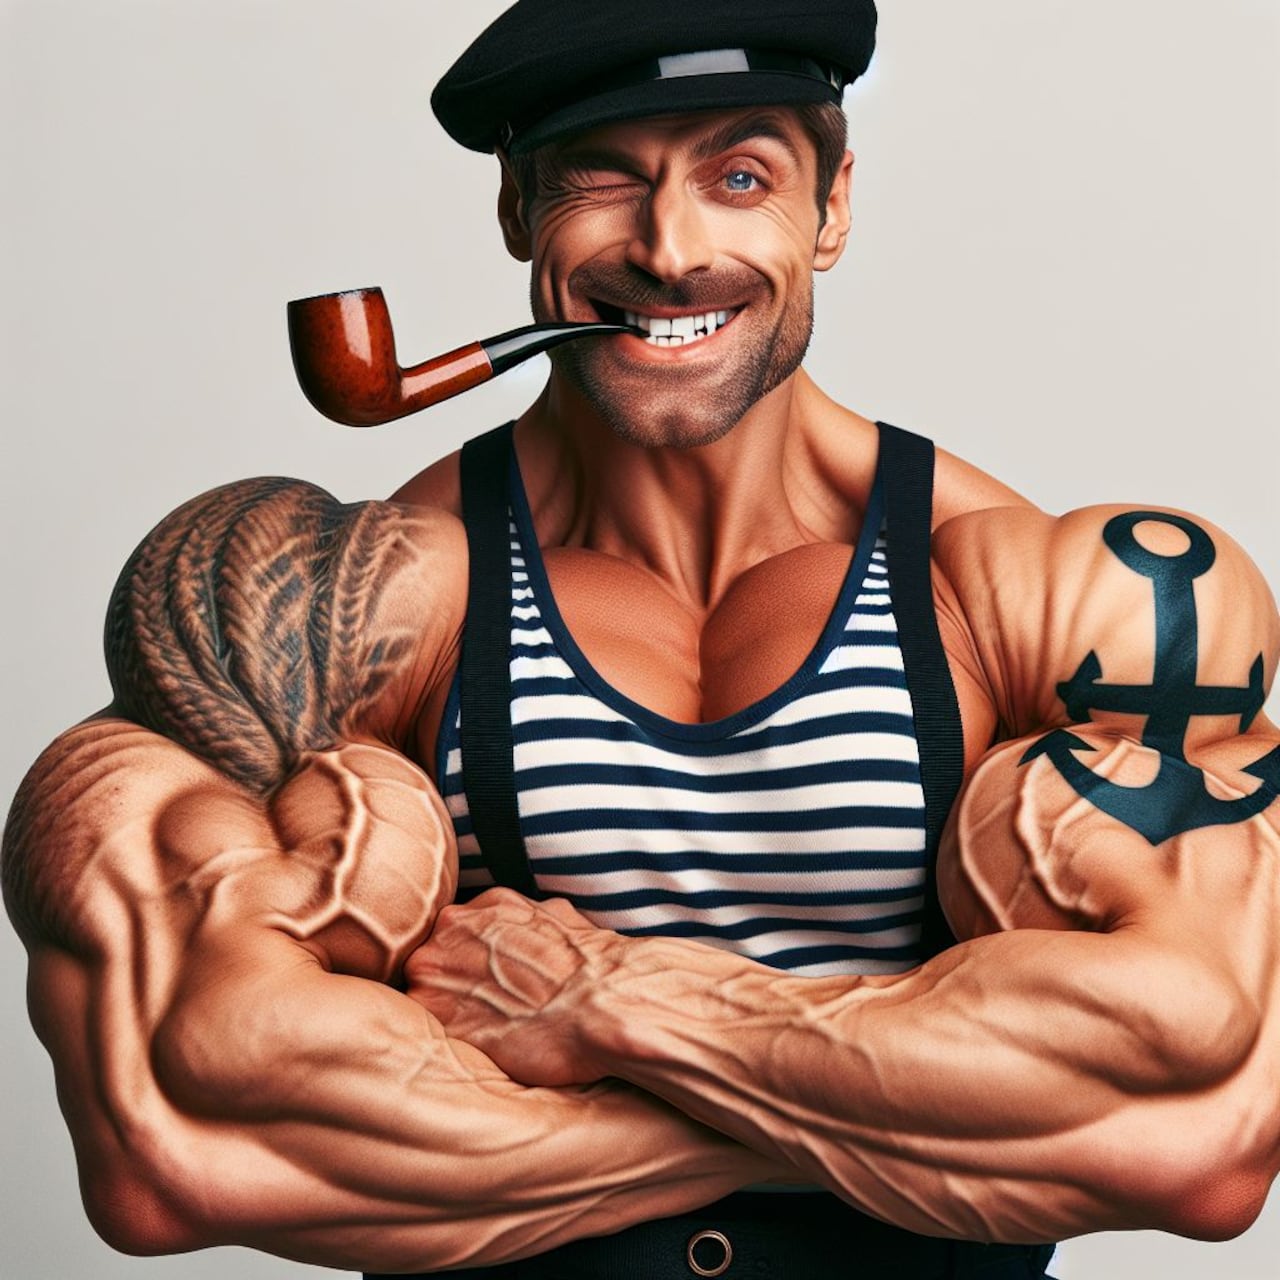 Popeye el marino